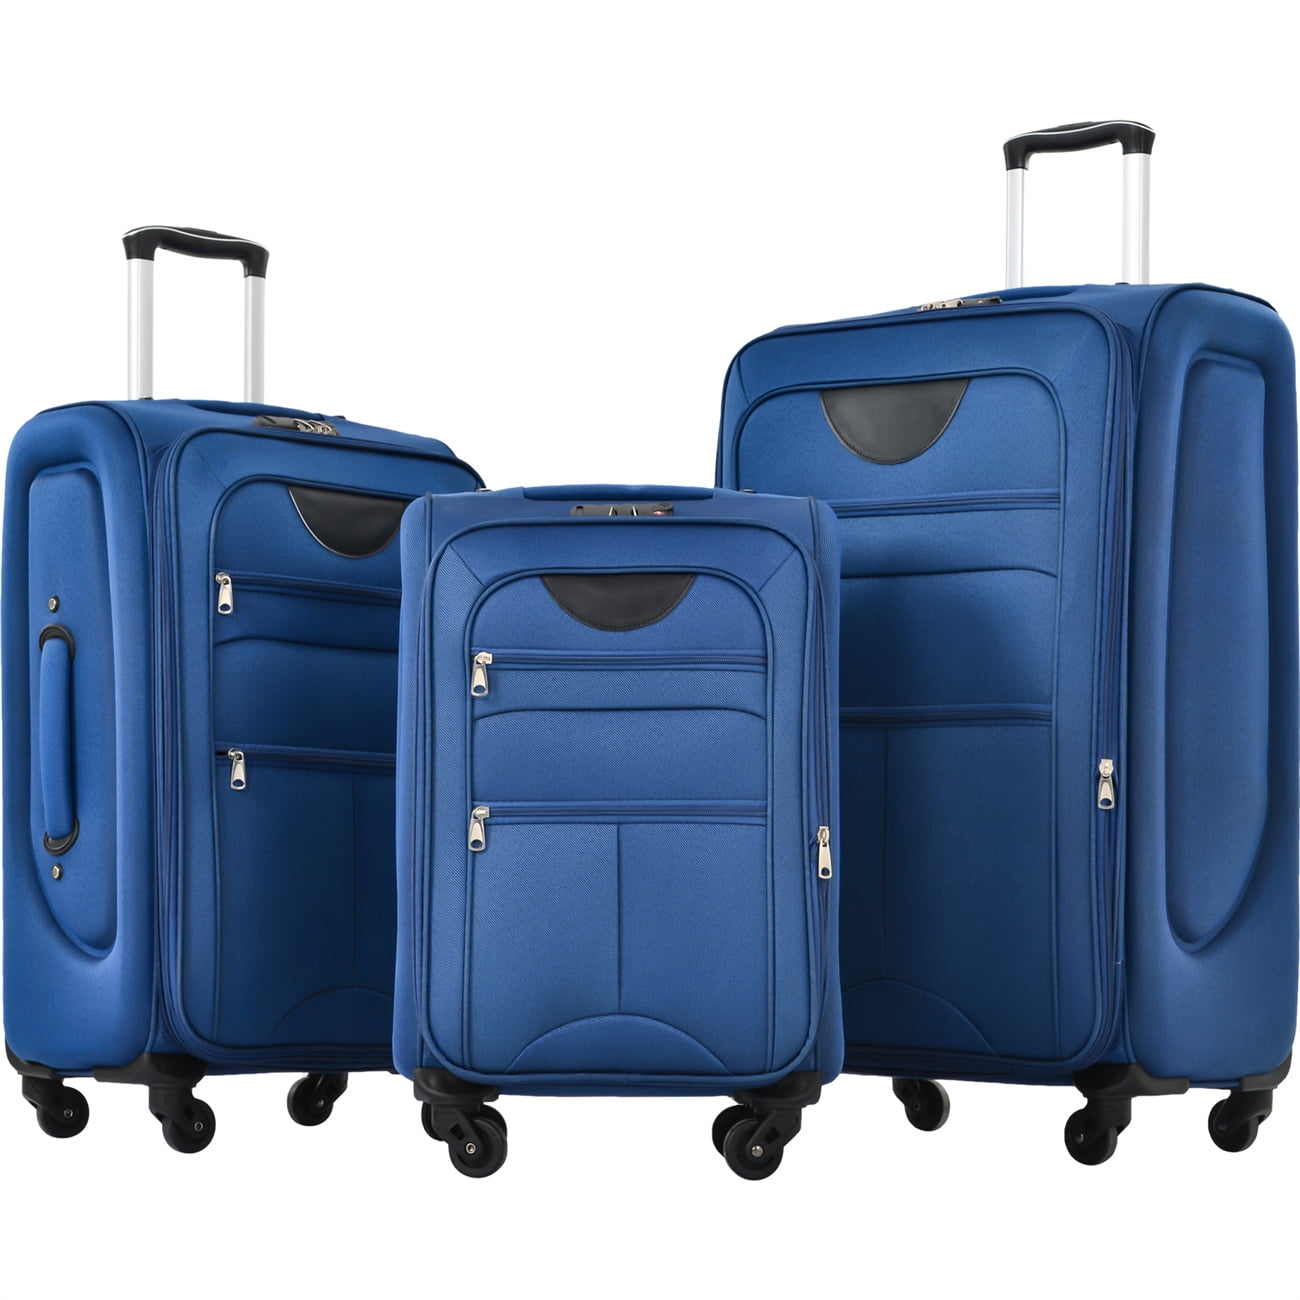 Luggage 3 Piece Sets, Softside Luggage Expandable Suitcase with 4 ...